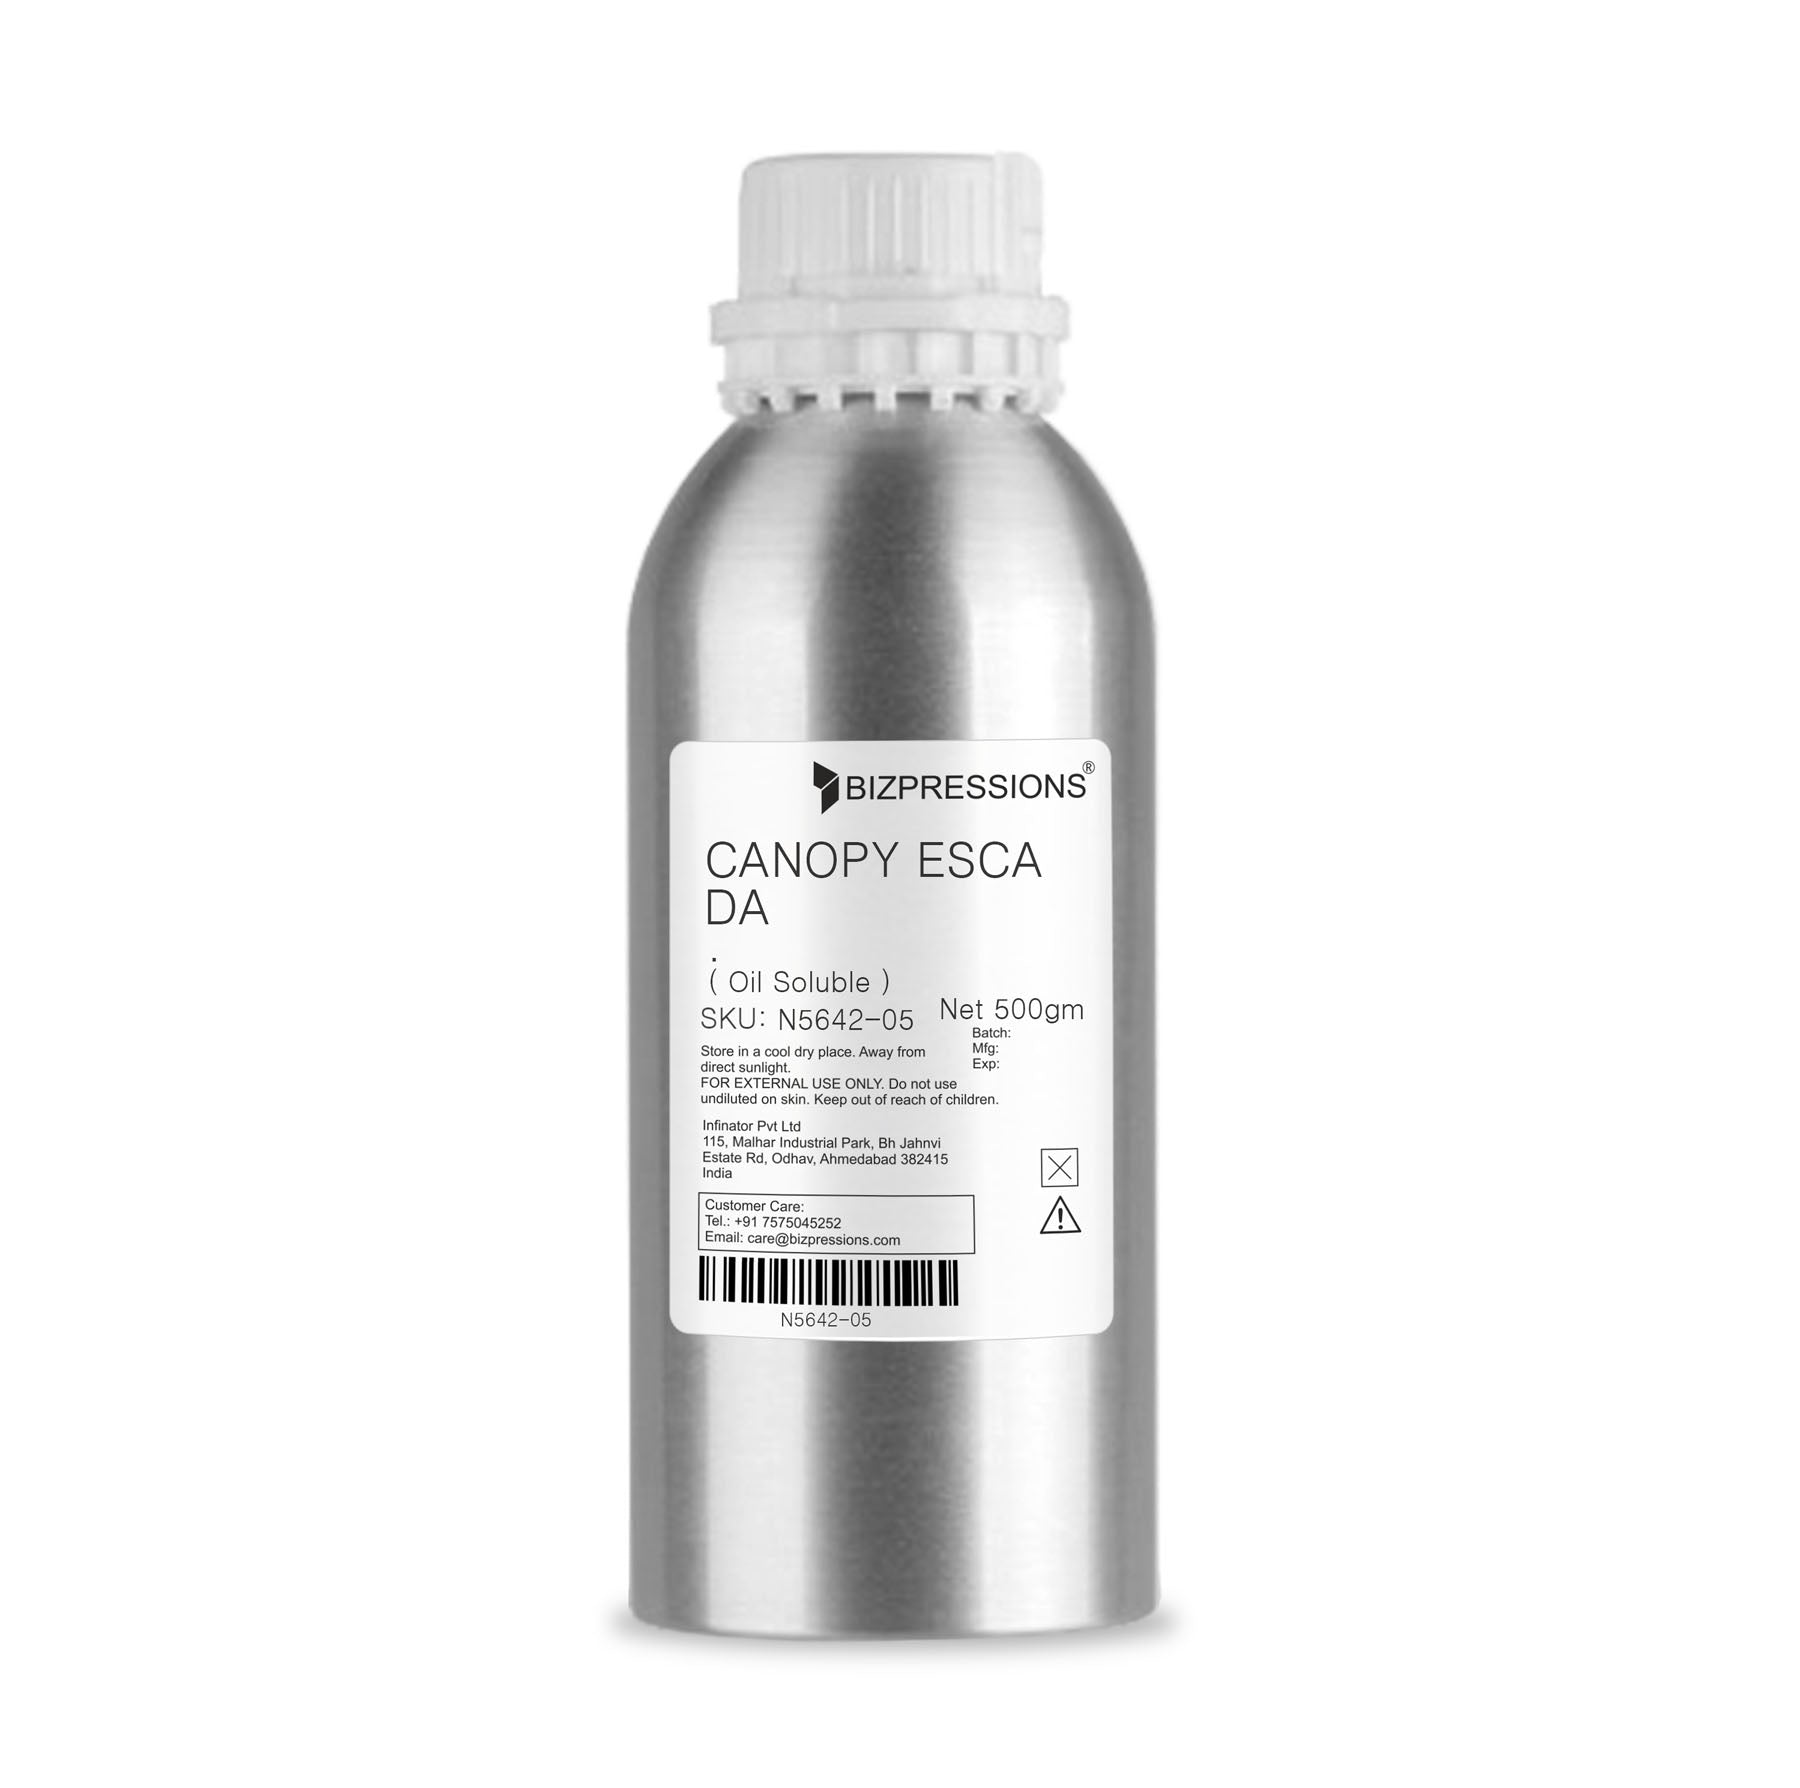 CANOPY ESCADA - Fragrance ( Oil Soluble ) - 500 gm